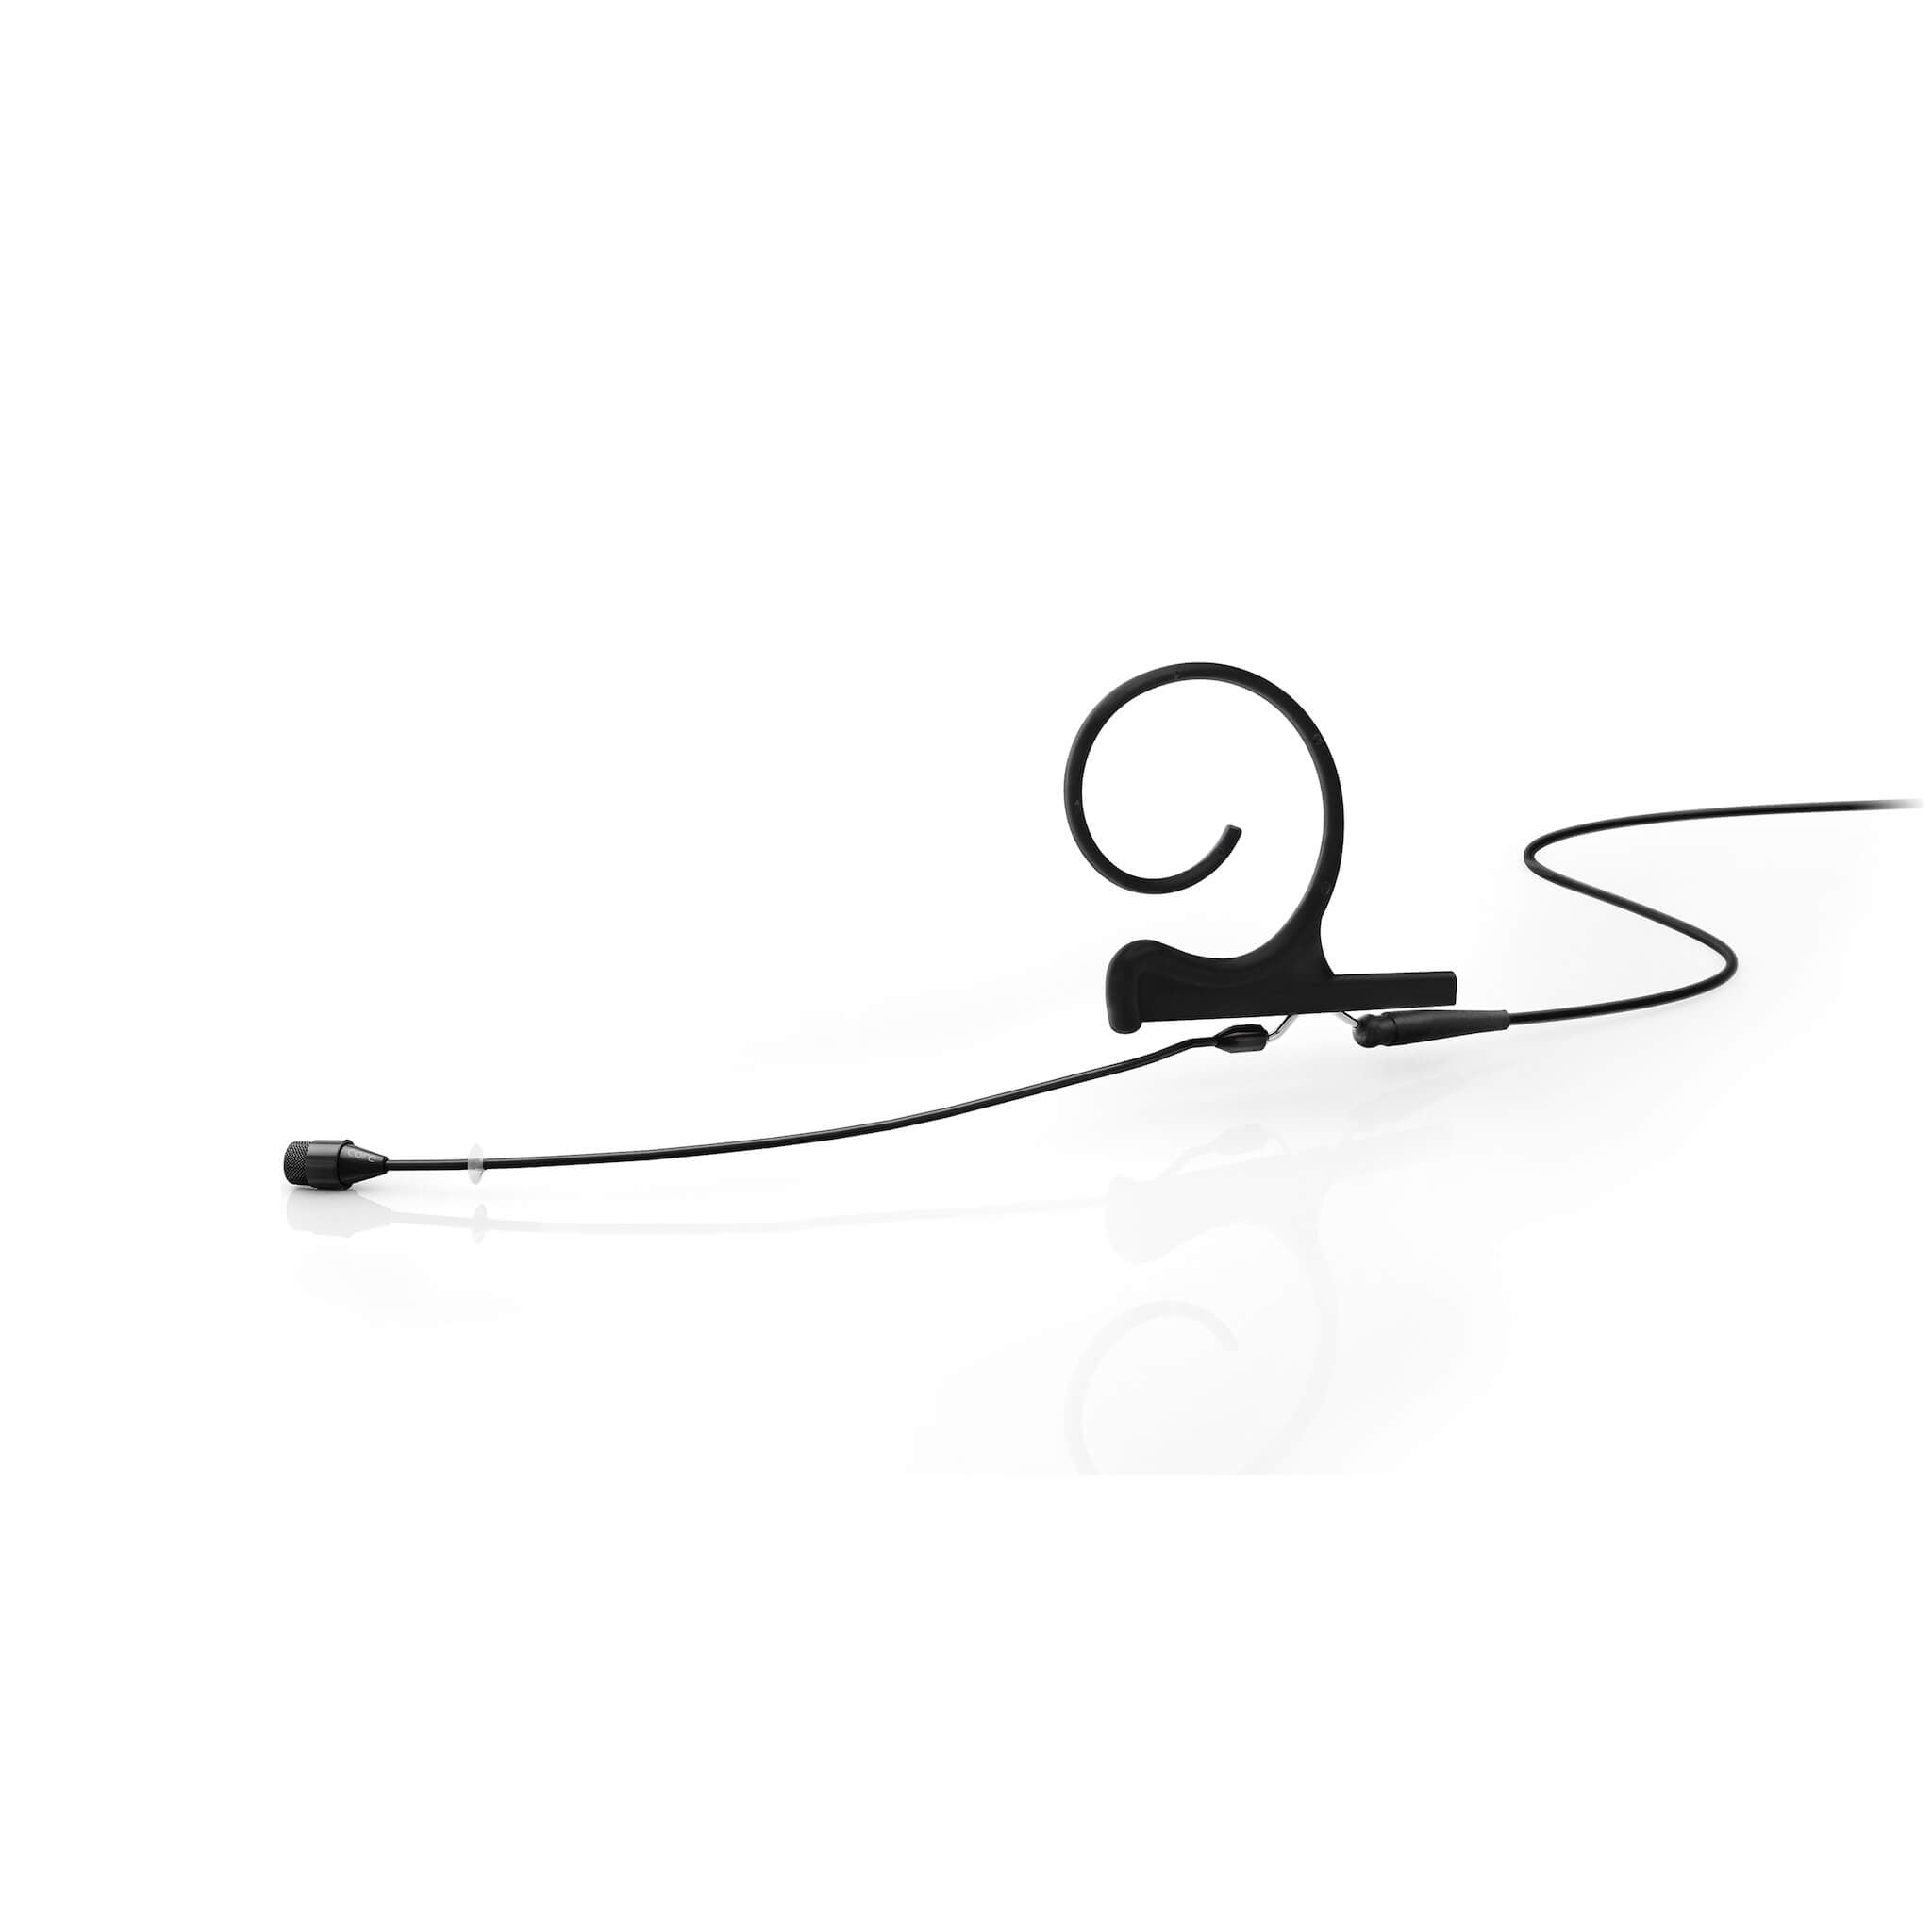 DPA 4266 CORE Omnidirectional Flex Earset Microphone, black 90mm boom